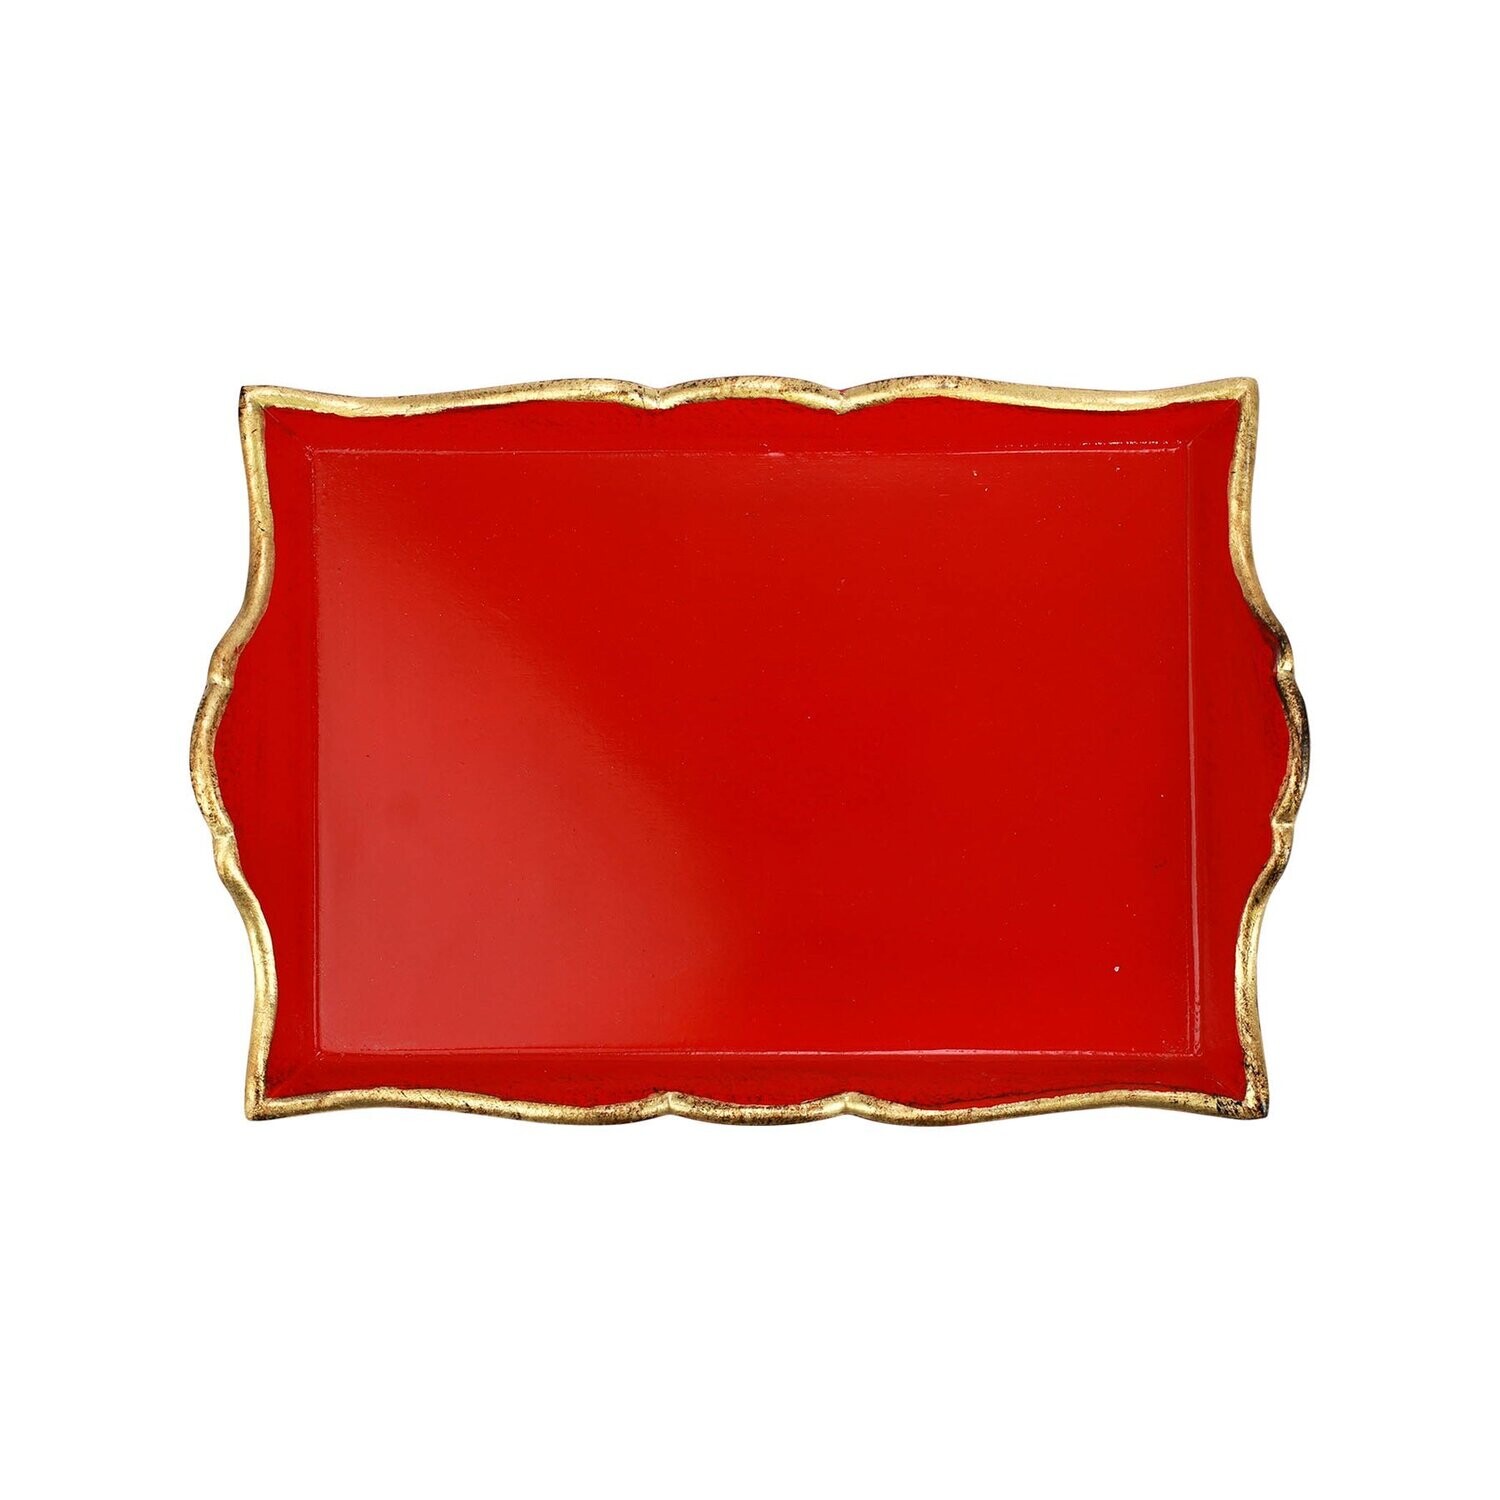 VIETRI Florentine Red SMALL rectangular tray